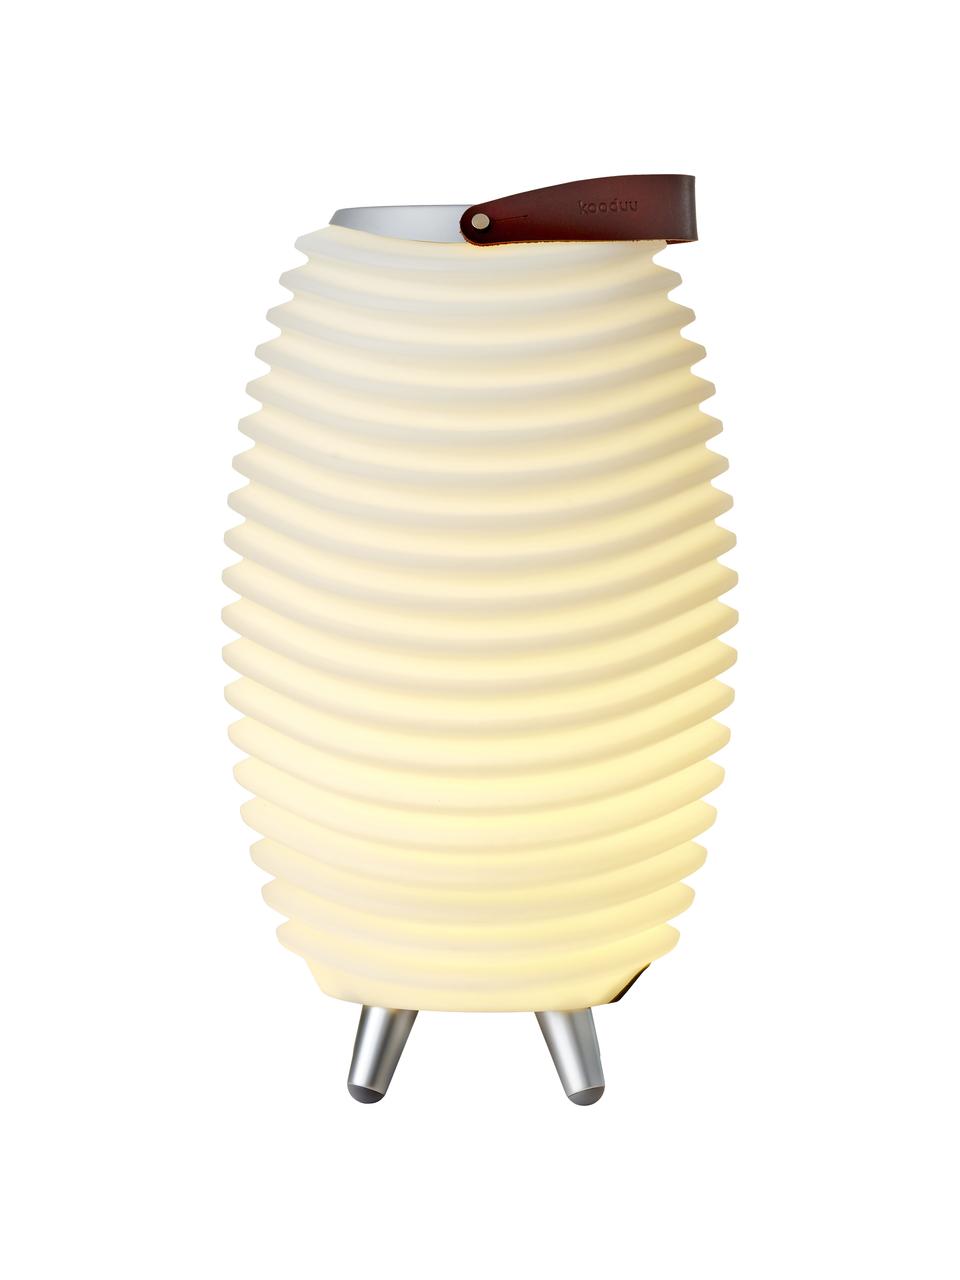 Mobiele tuinlamp Synergy S met luidspreker en flessenkoeler, Lampenkap: kunststof, Decoratie: geborsteld aluminium, Wit, chroomkleurig, bruin, Ø 24 x H 41 cm